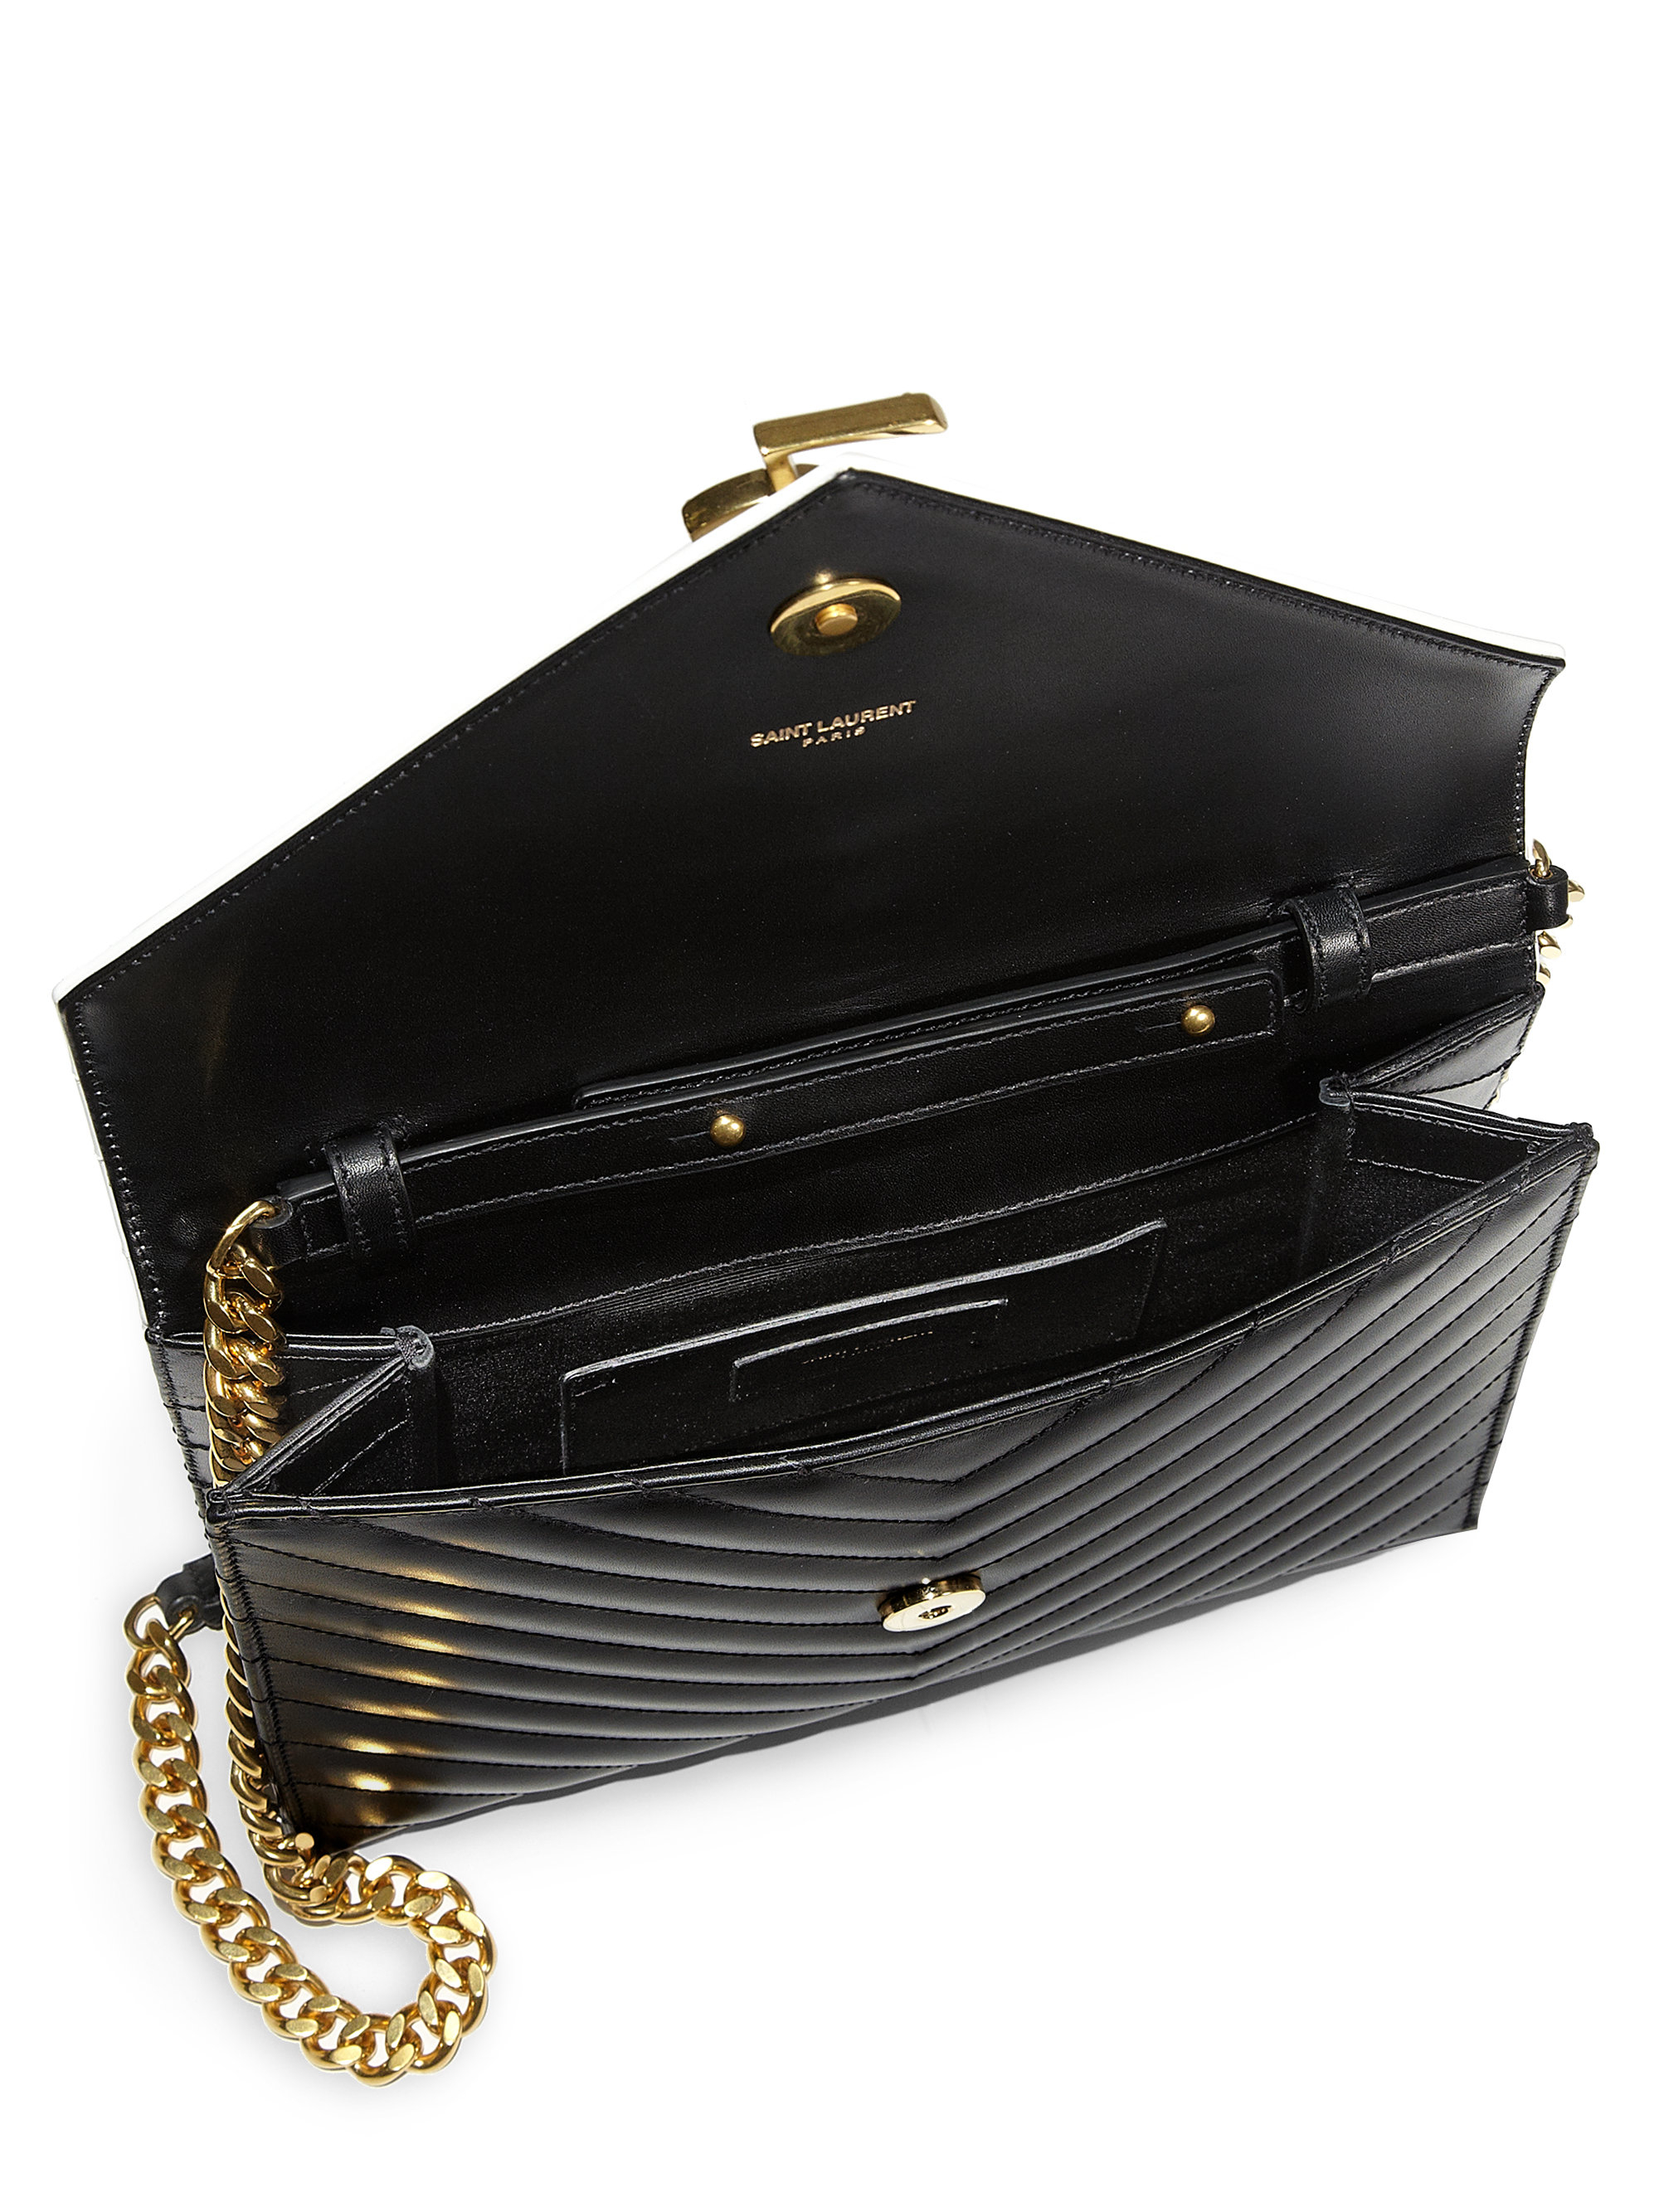 yves saint laurent bag black, ysl handbags sale